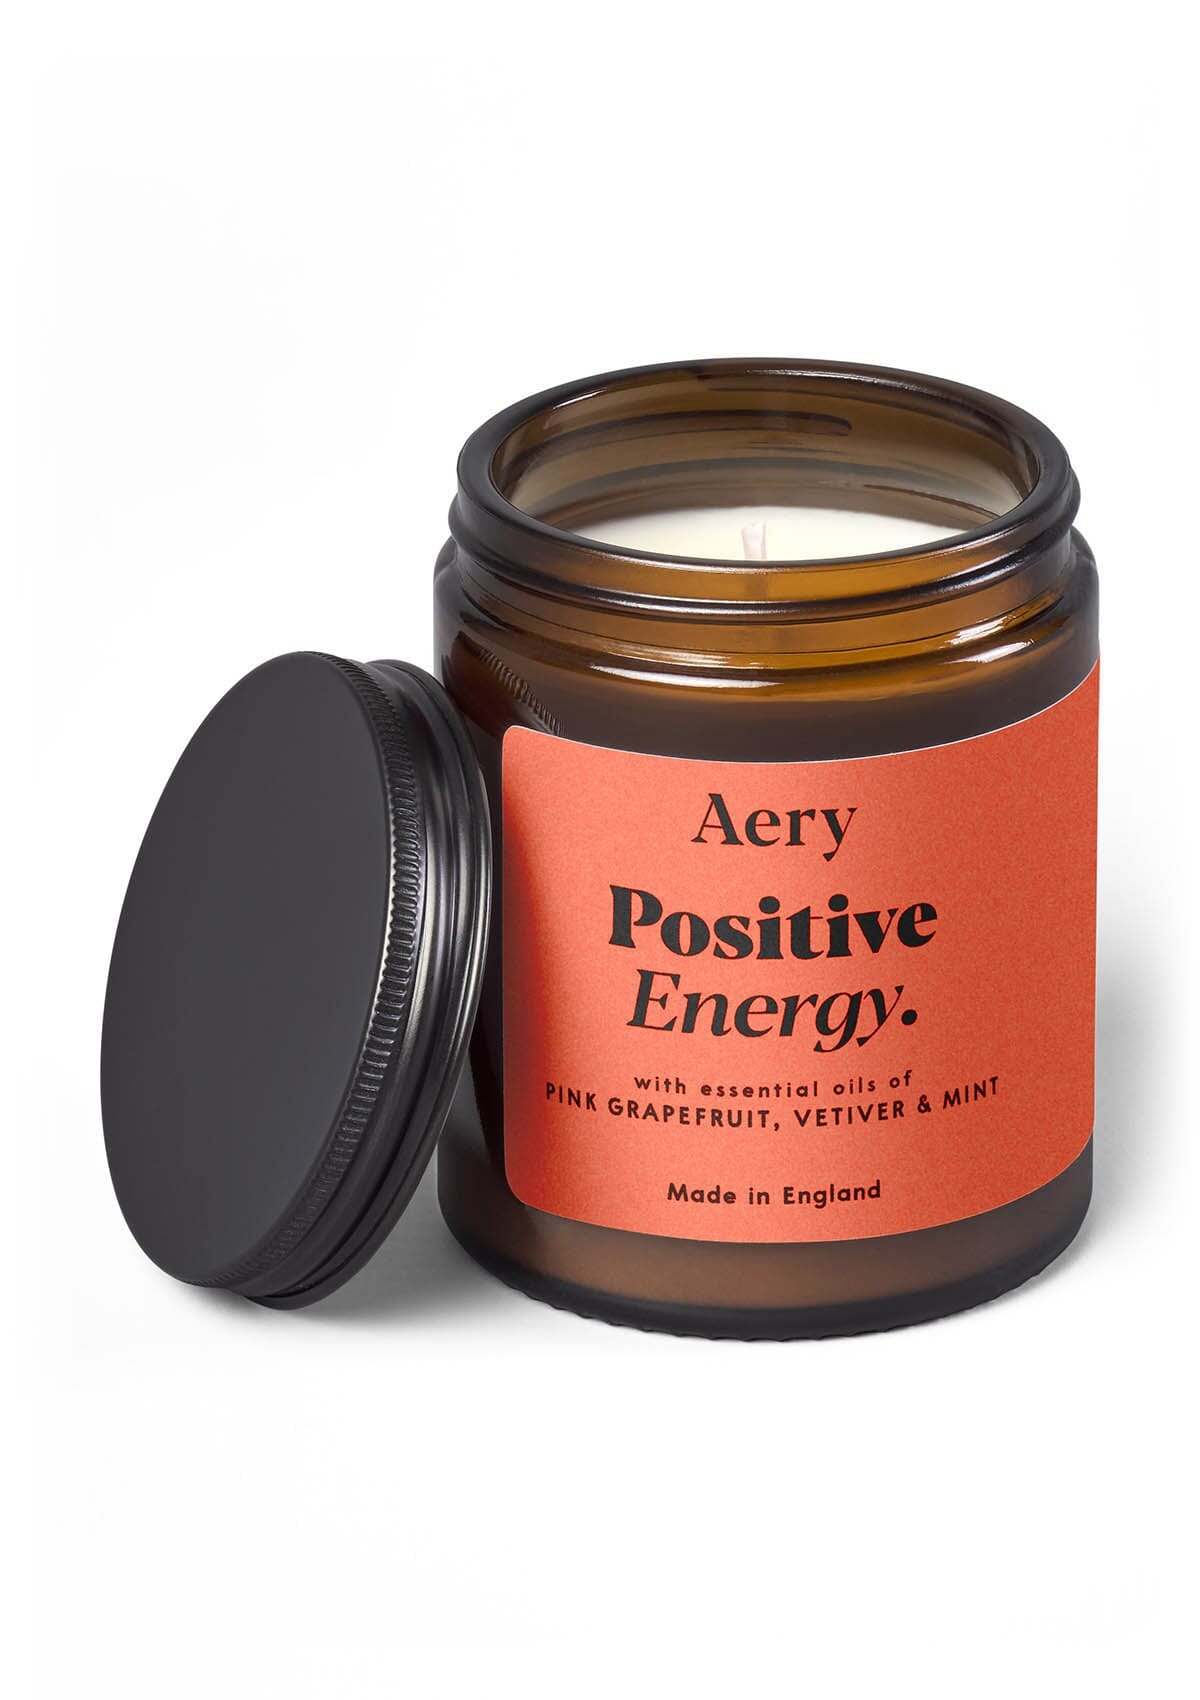 Orange Positive Energy candle by Aery on white background 